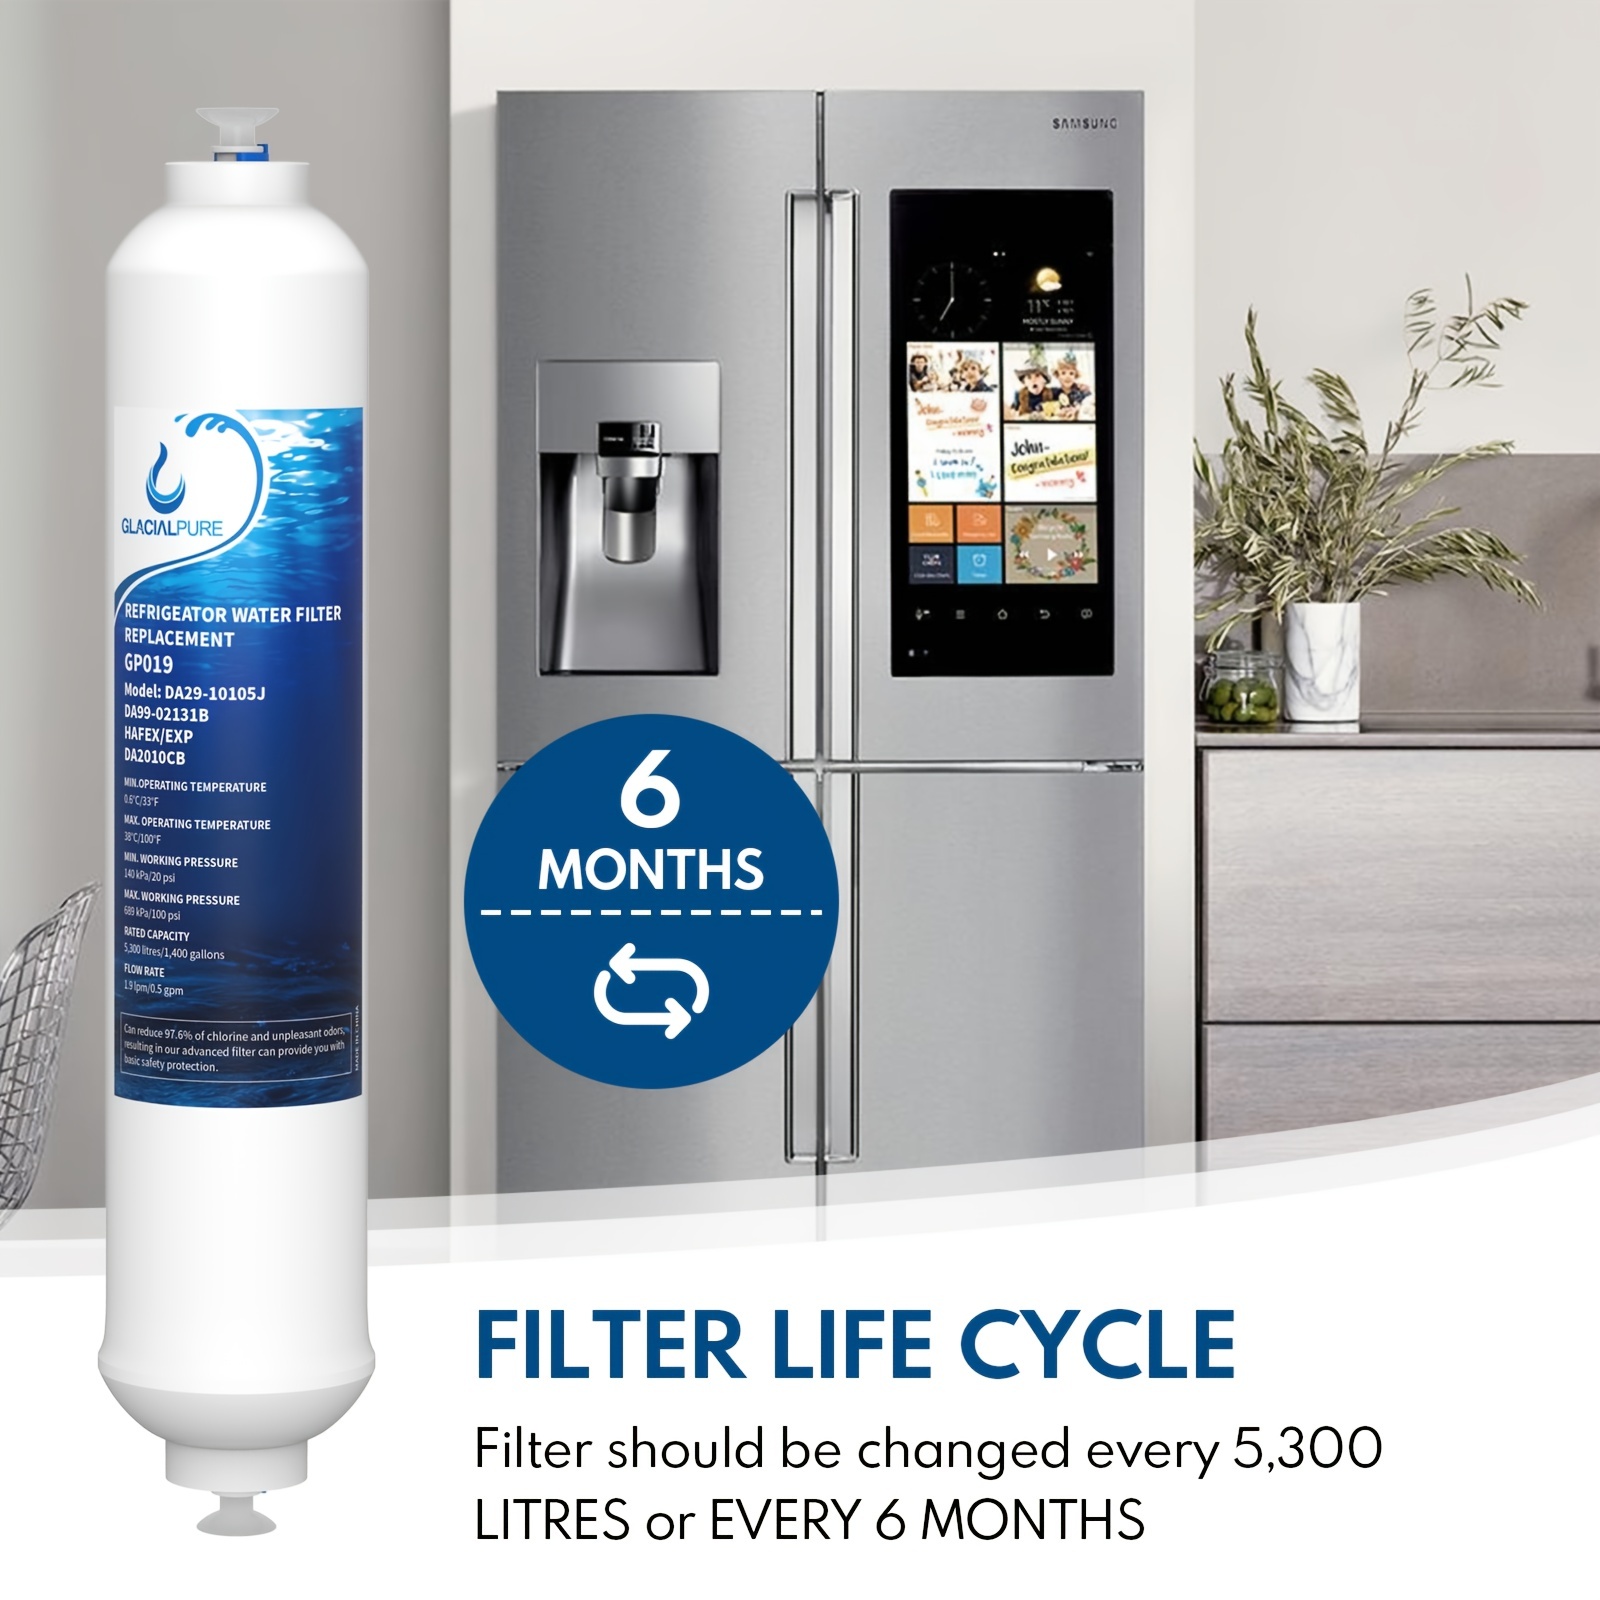 Samsung DA29-10105J refrigerator water filter